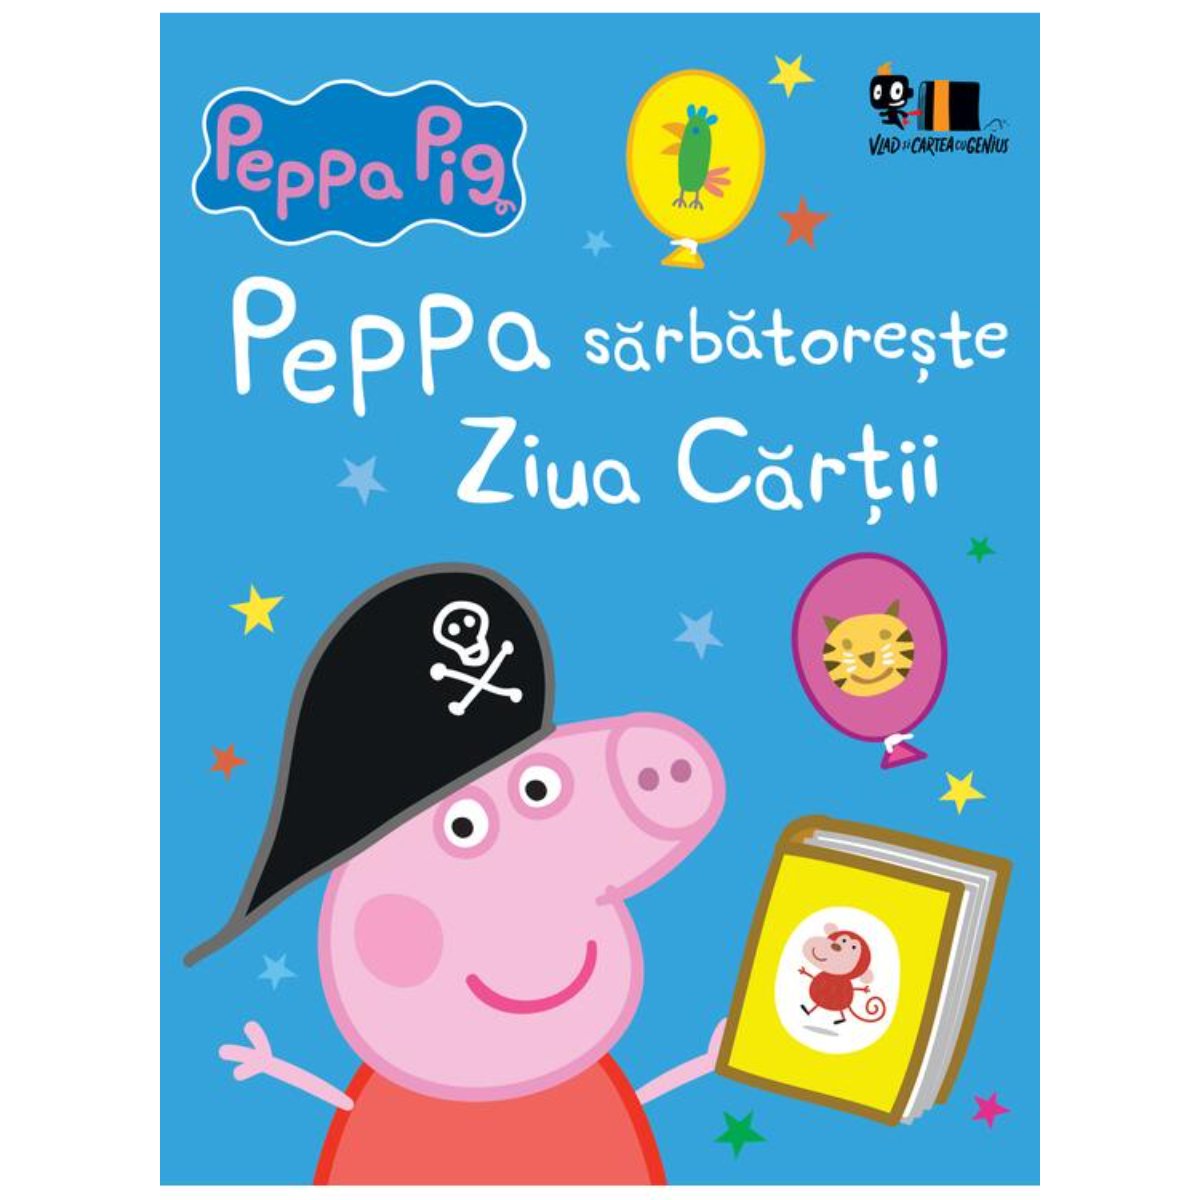 Peppa Pig, Sarbatoreste ziua cartii